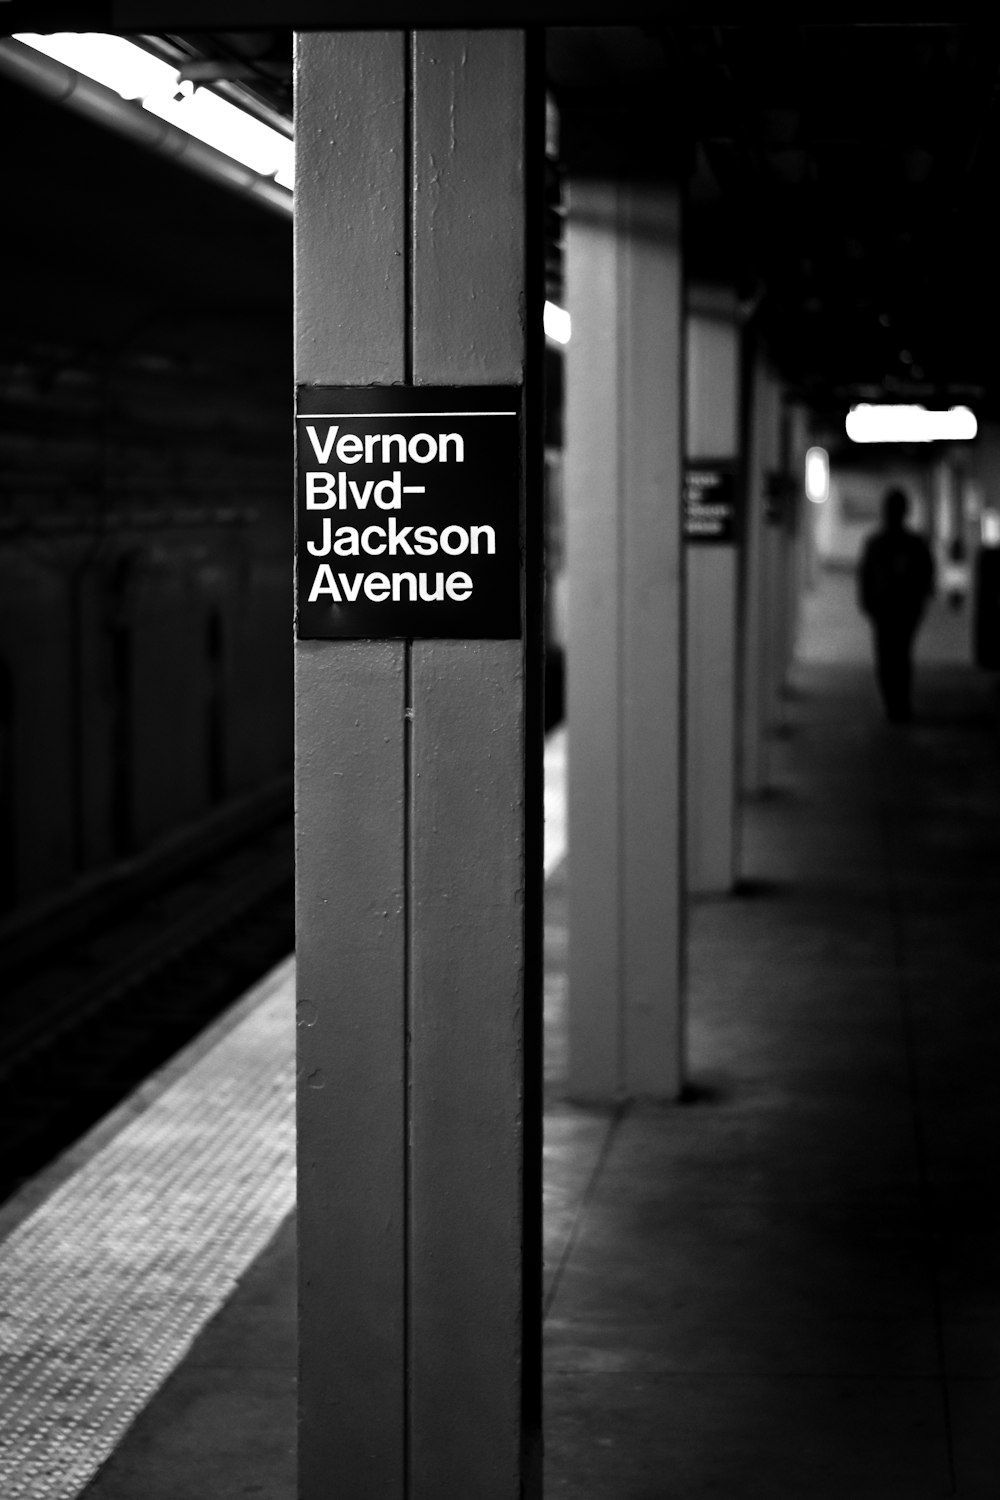 Vernon Boulevard Jackson Avenue building signage